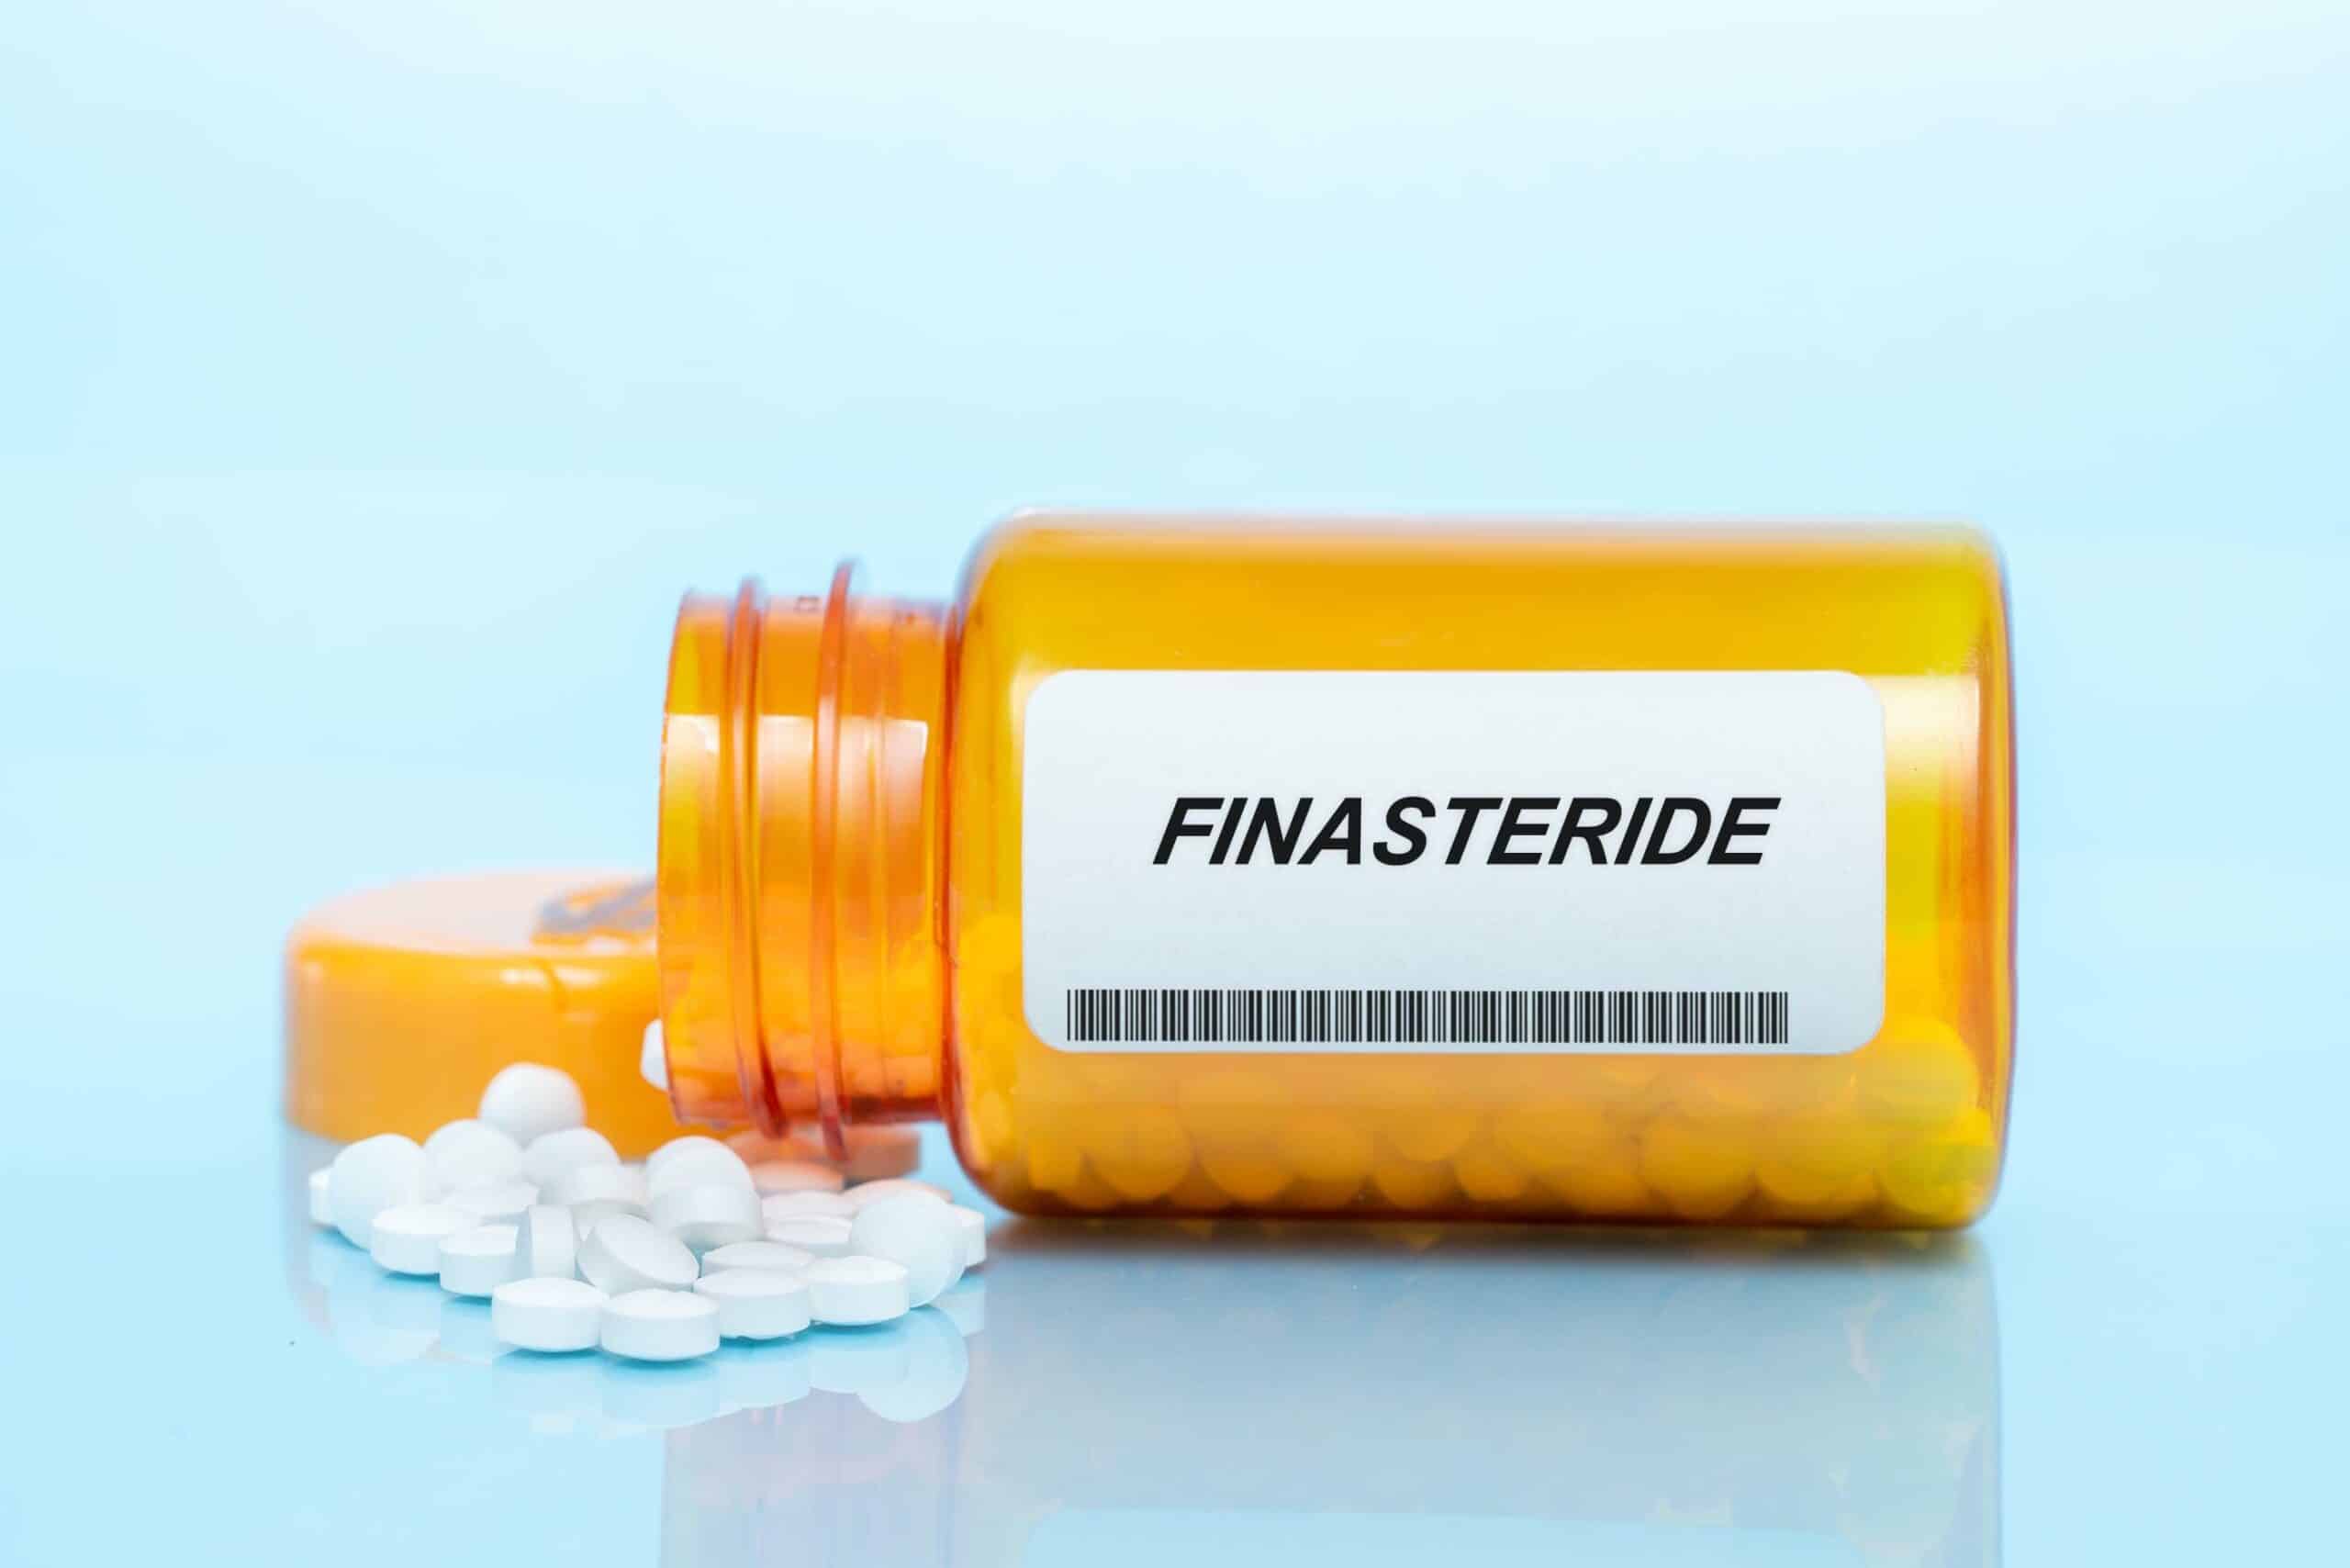 Finasteride Drug In Prescription Medication Pills Bottle